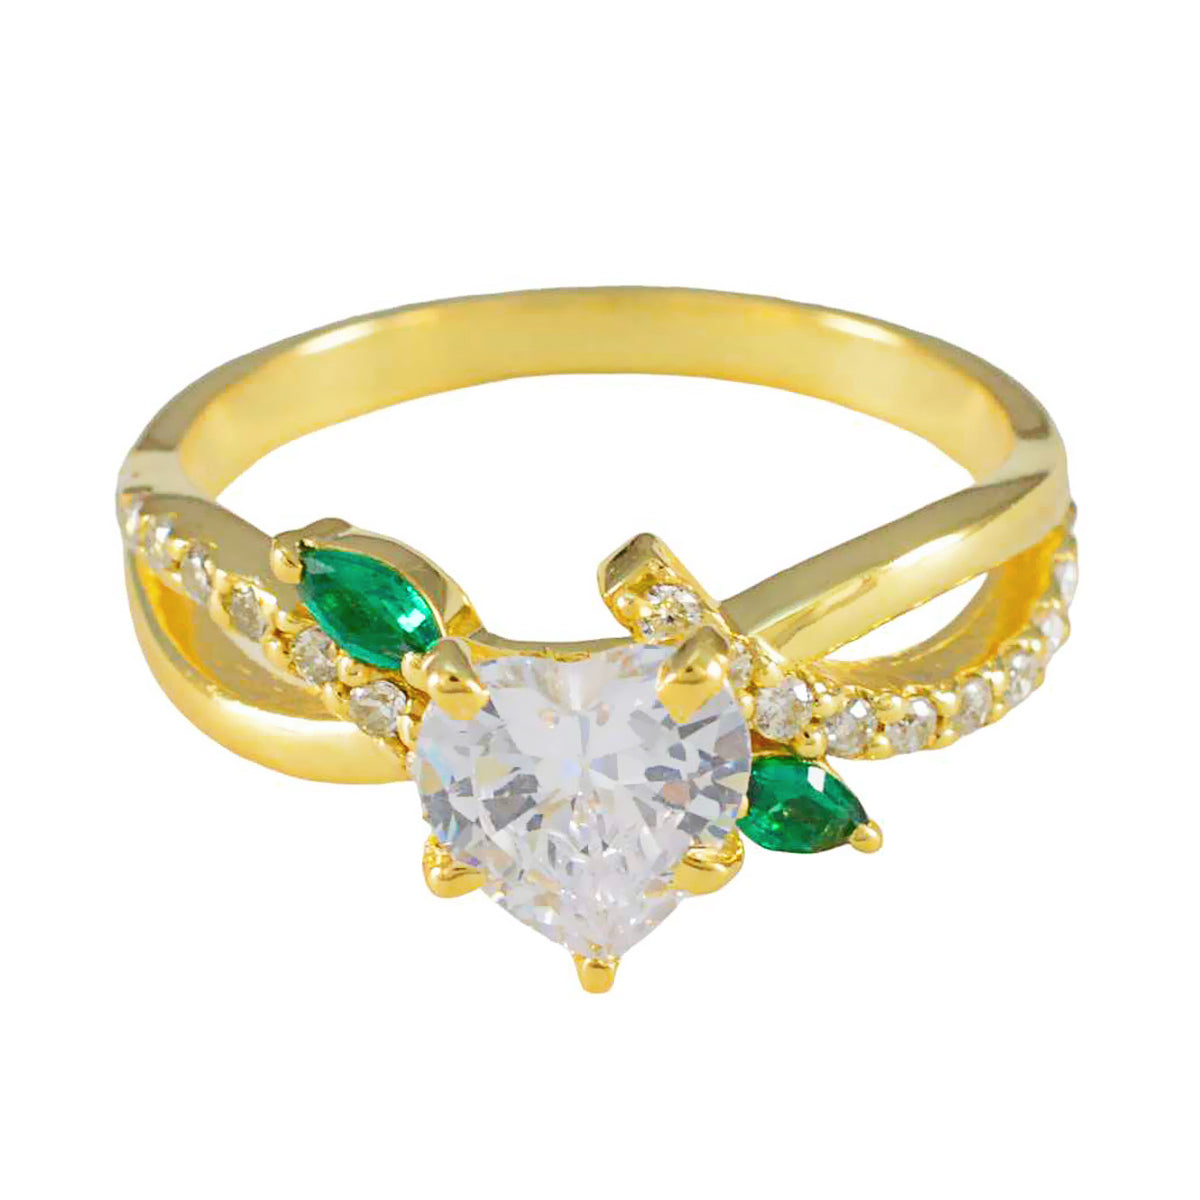 Riyo Jaipur zilveren ring met geelgouden smaragdgroene CZ steen hartvorm Prong setting antieke sieraden afstudeerring